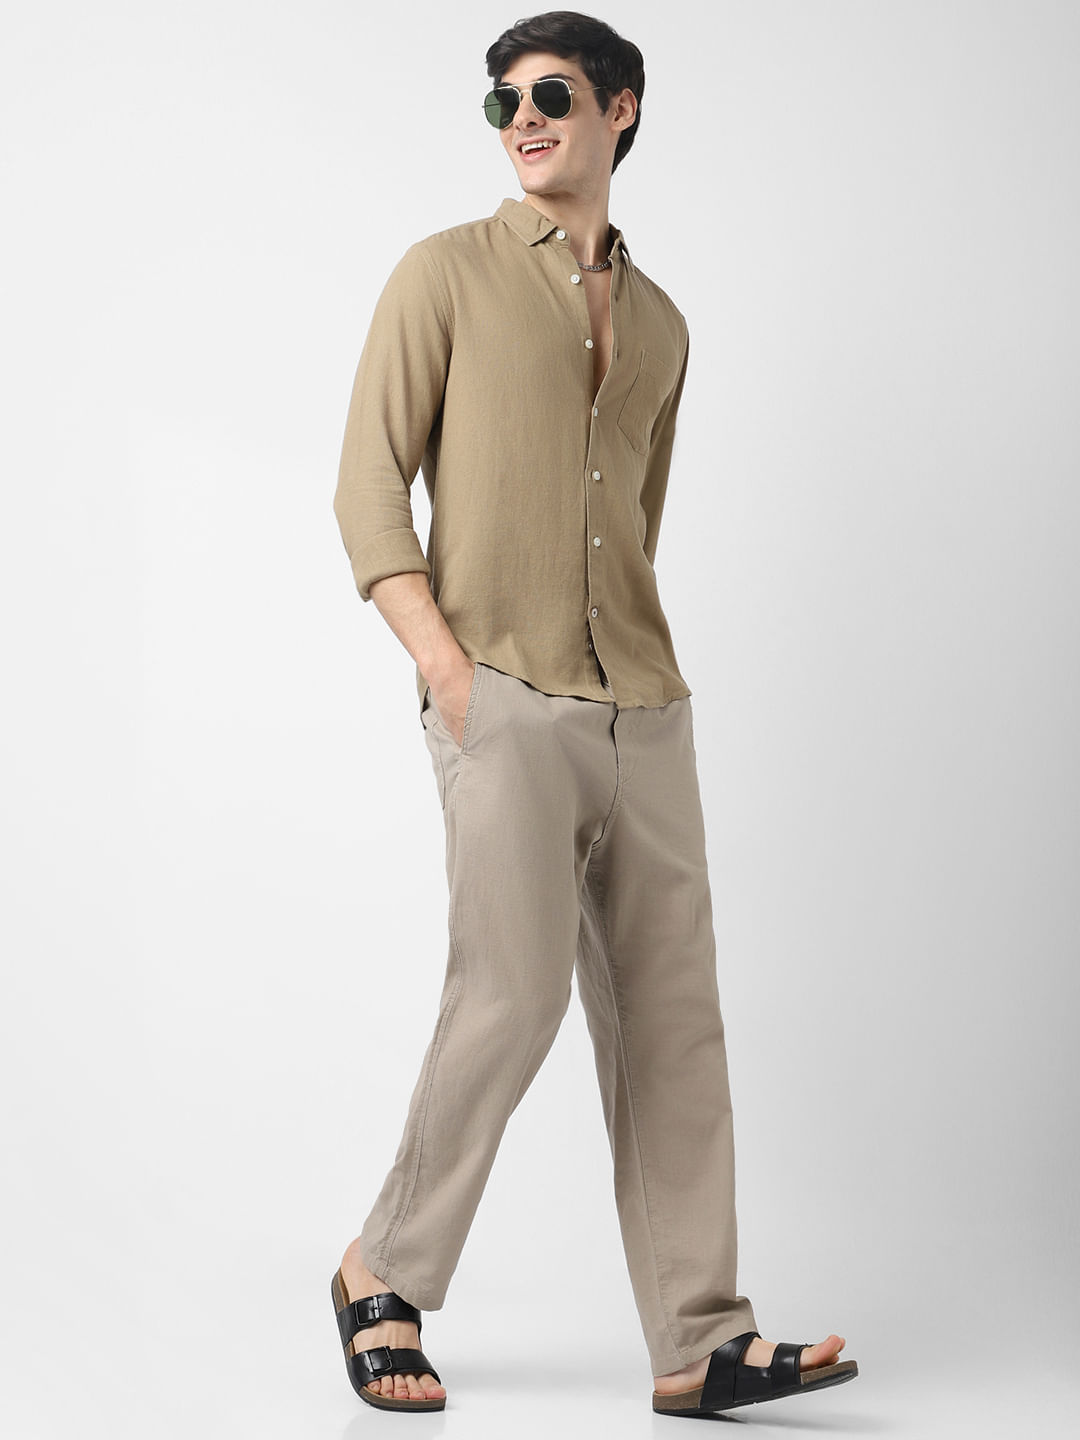 Buy Light Khaki Shirt | Casual Khaki Solid Polos for Men Online | Andamen